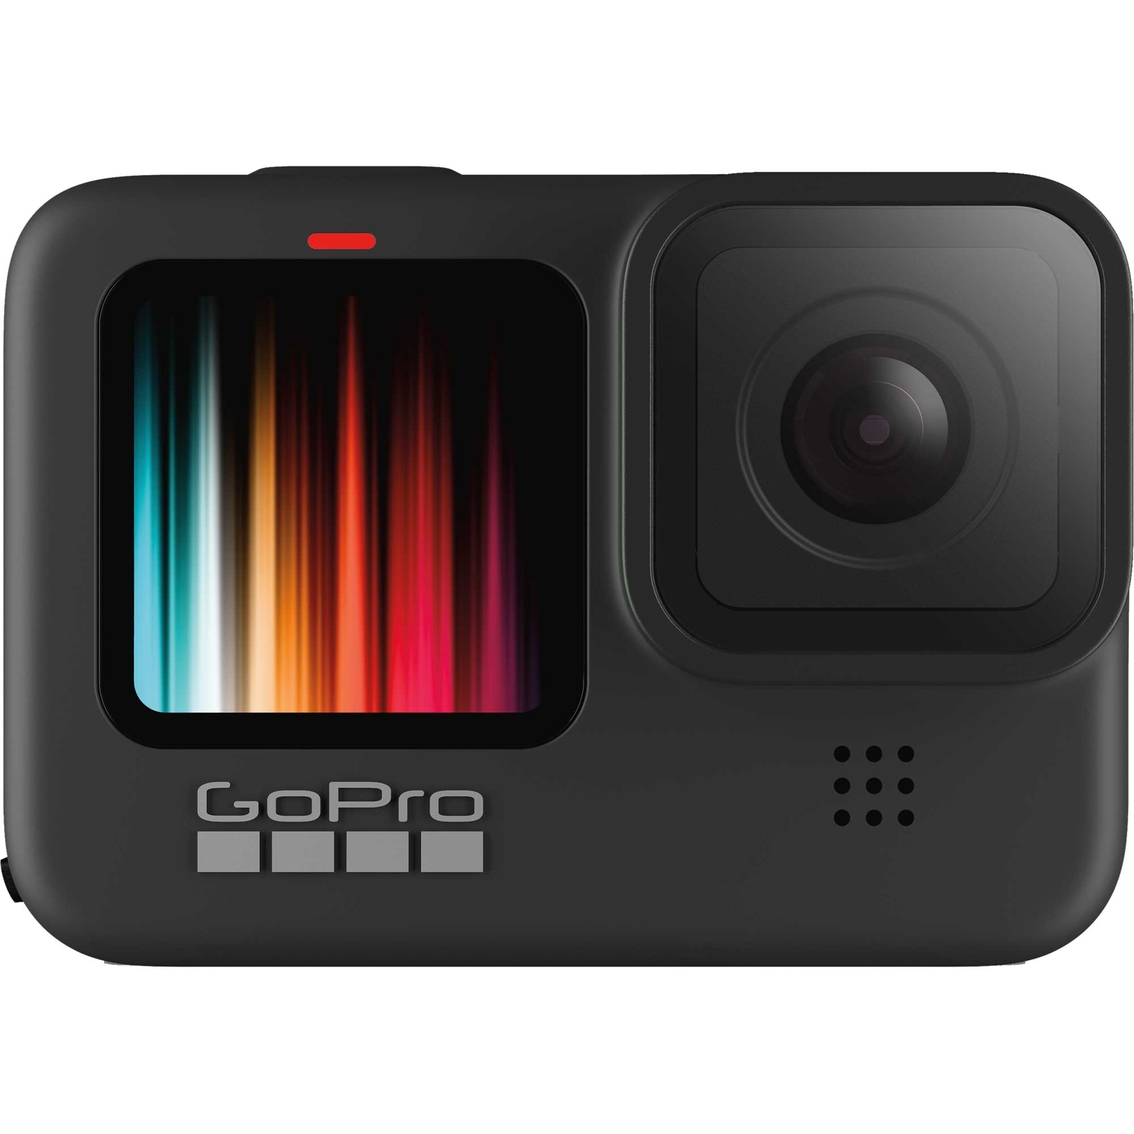 GoPro Hero 9 Black $229 Navy Exchange & AAFES (Military Only)